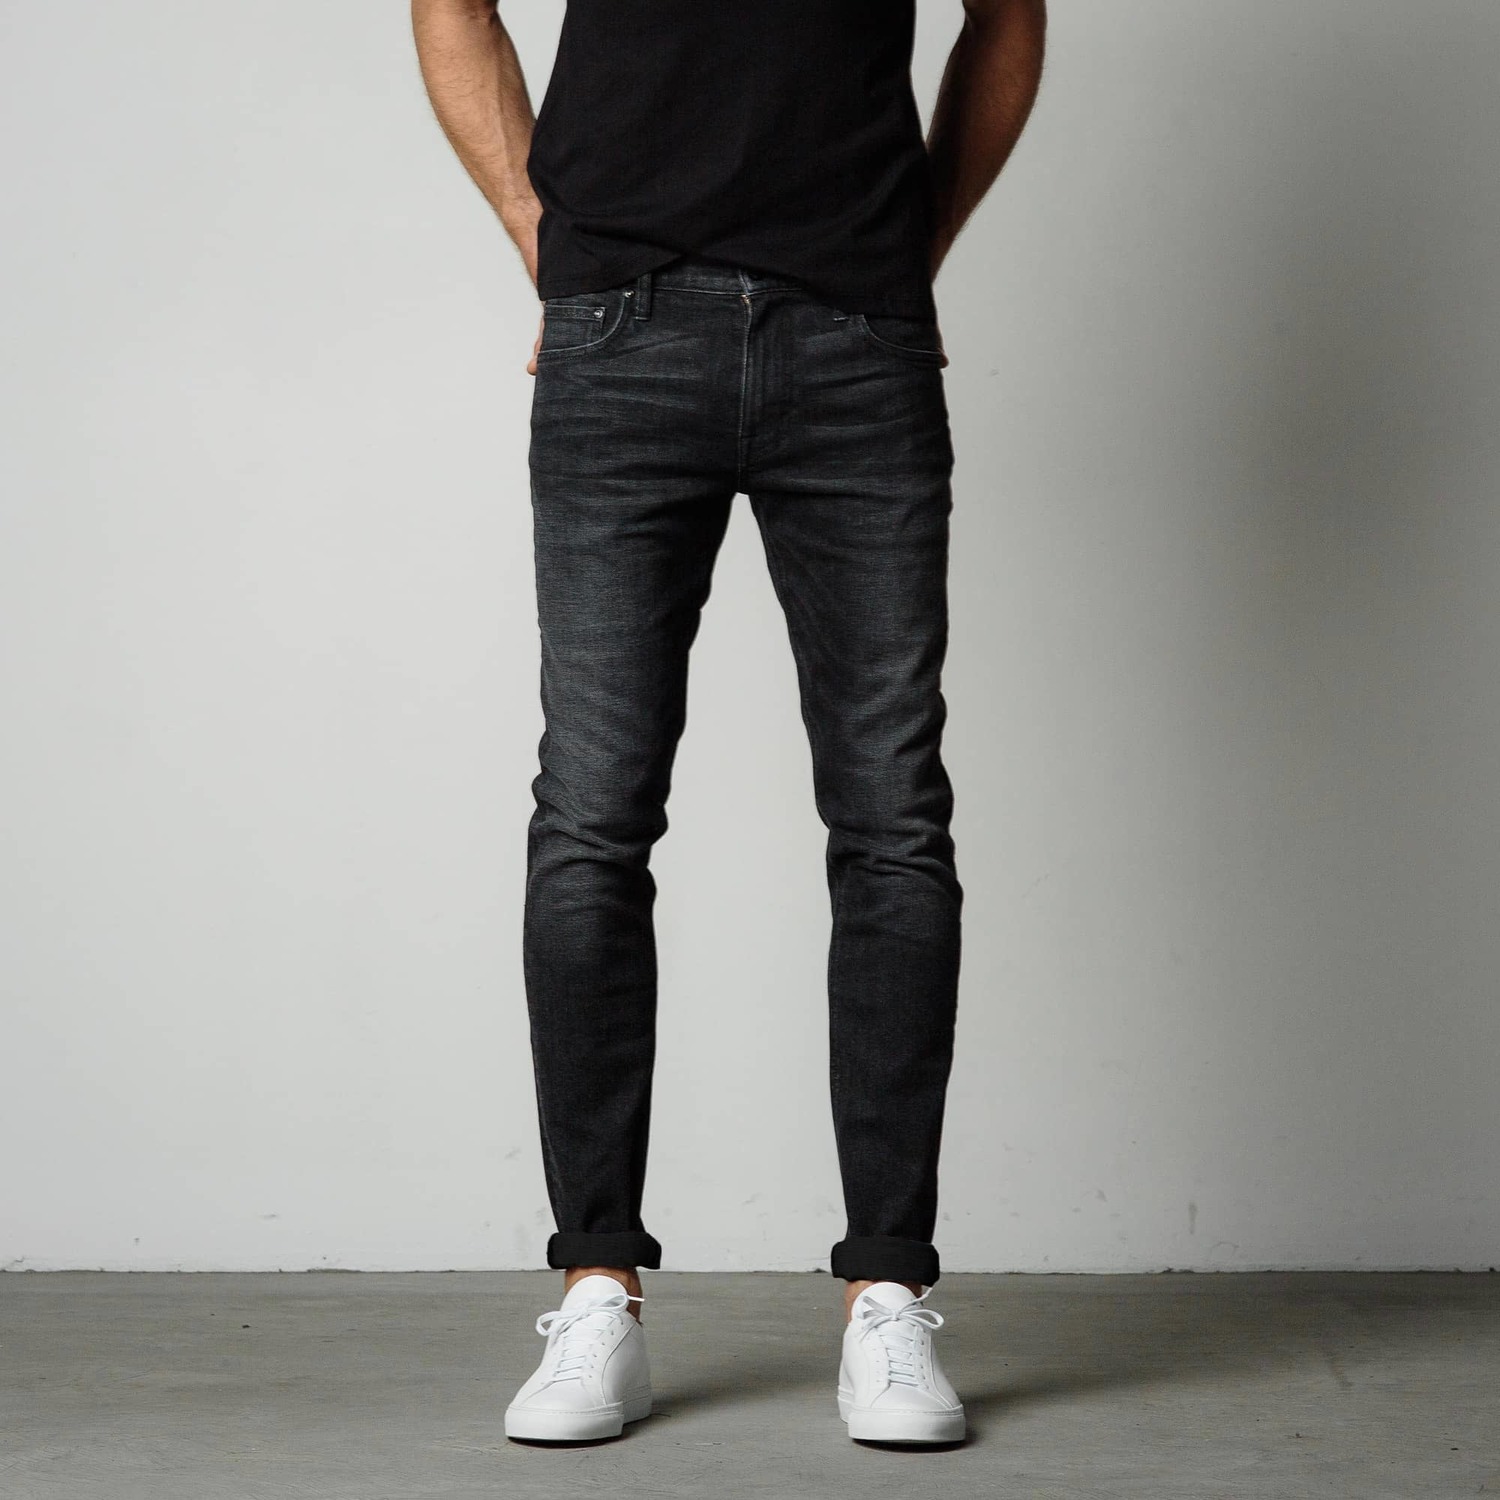 mens skinny jeans skinny jeans in faded black eoqysul